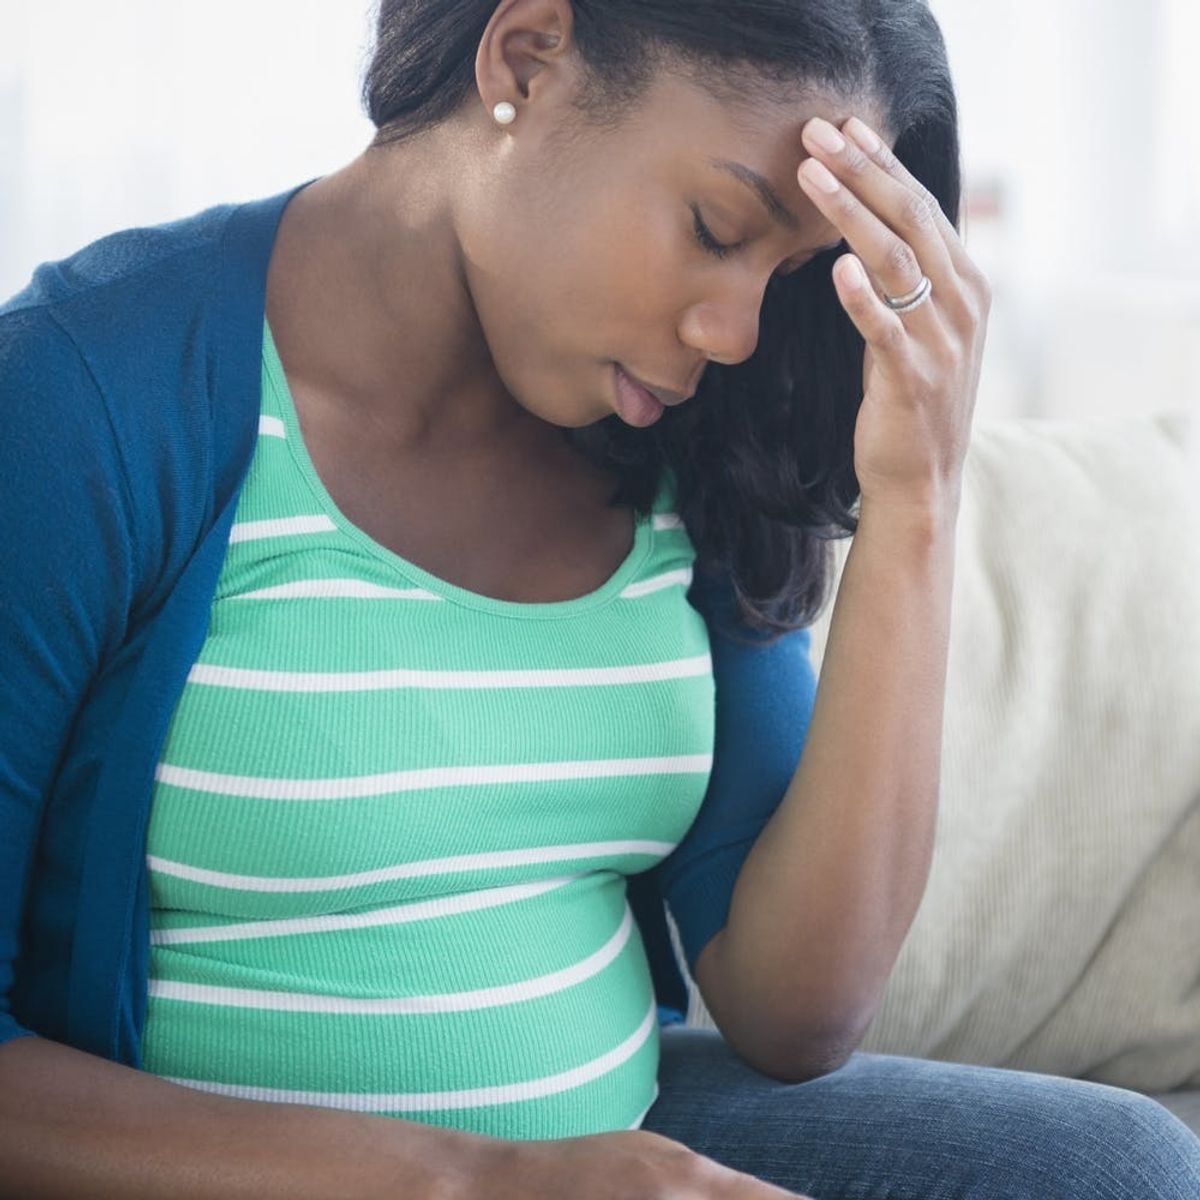 The Surprising Relationship Between Prenatal and Postpartum Mental Health